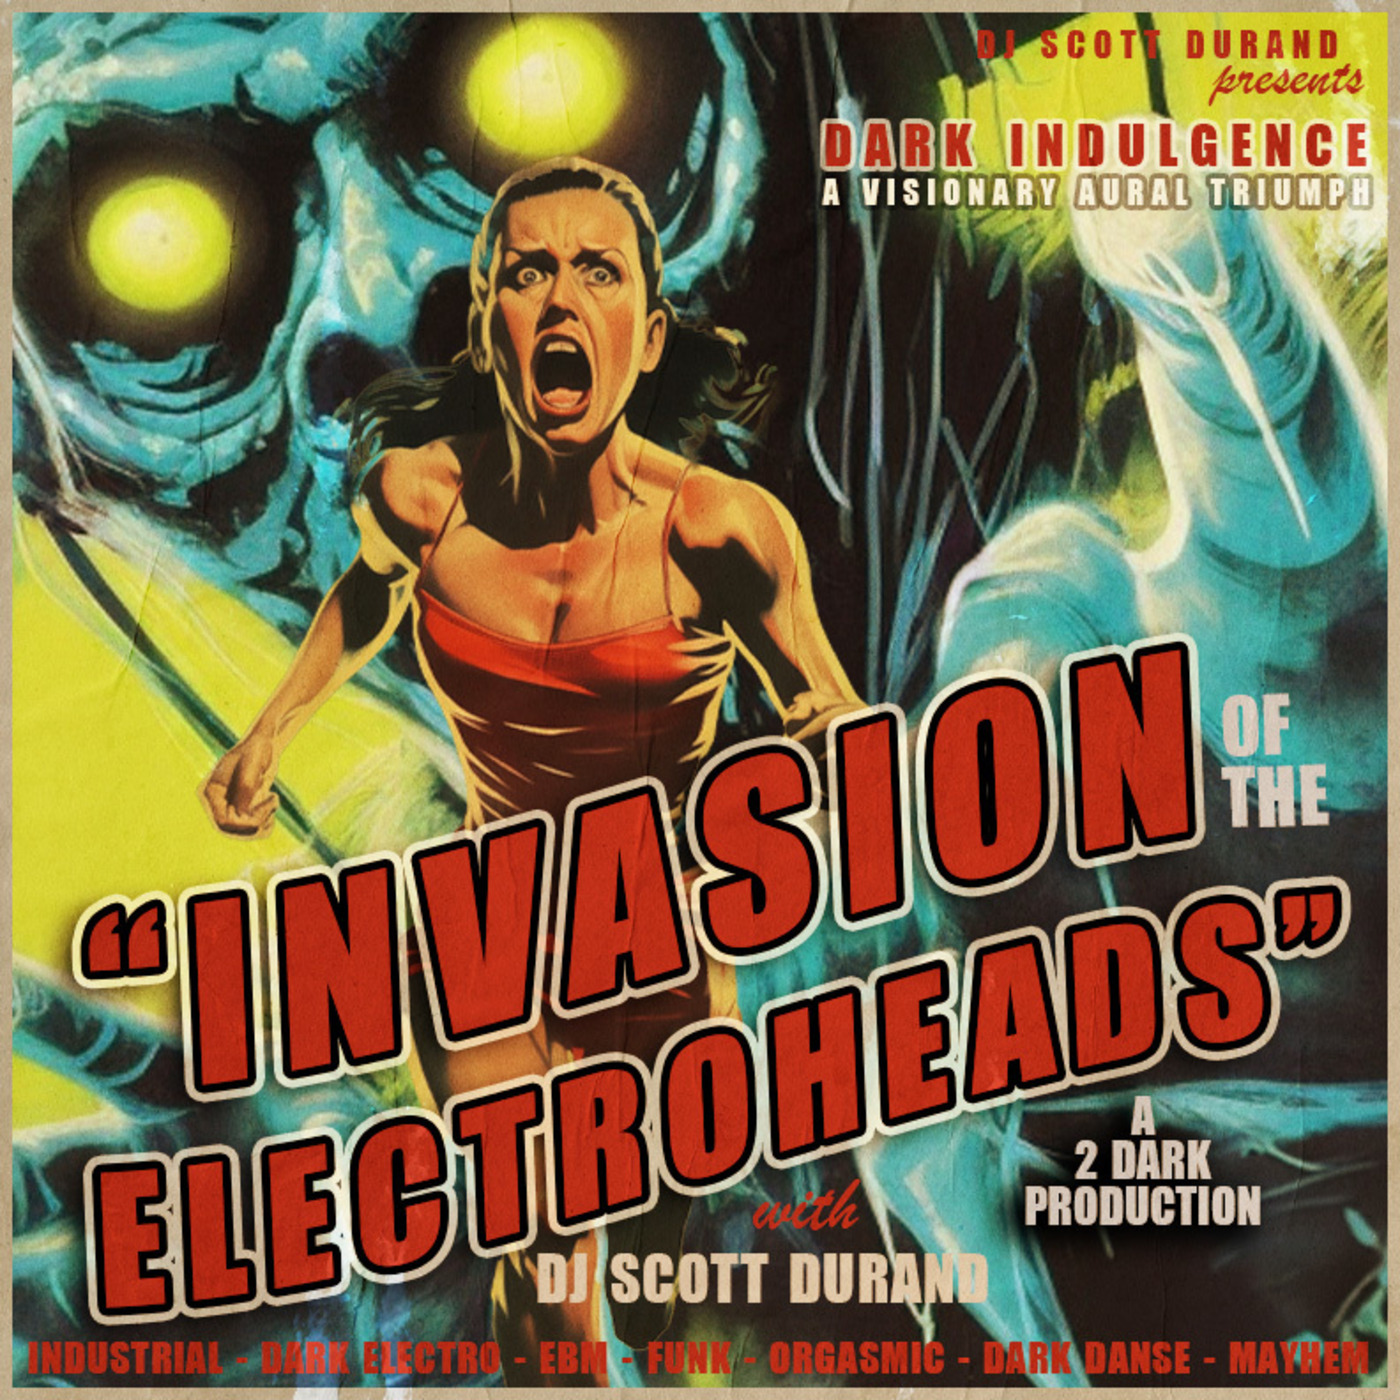 Dark Indulgence Halloween 2023 - Invasion of the Electroheads | Industrial | EBM | Dark Disco Mixshow by Scott Durand